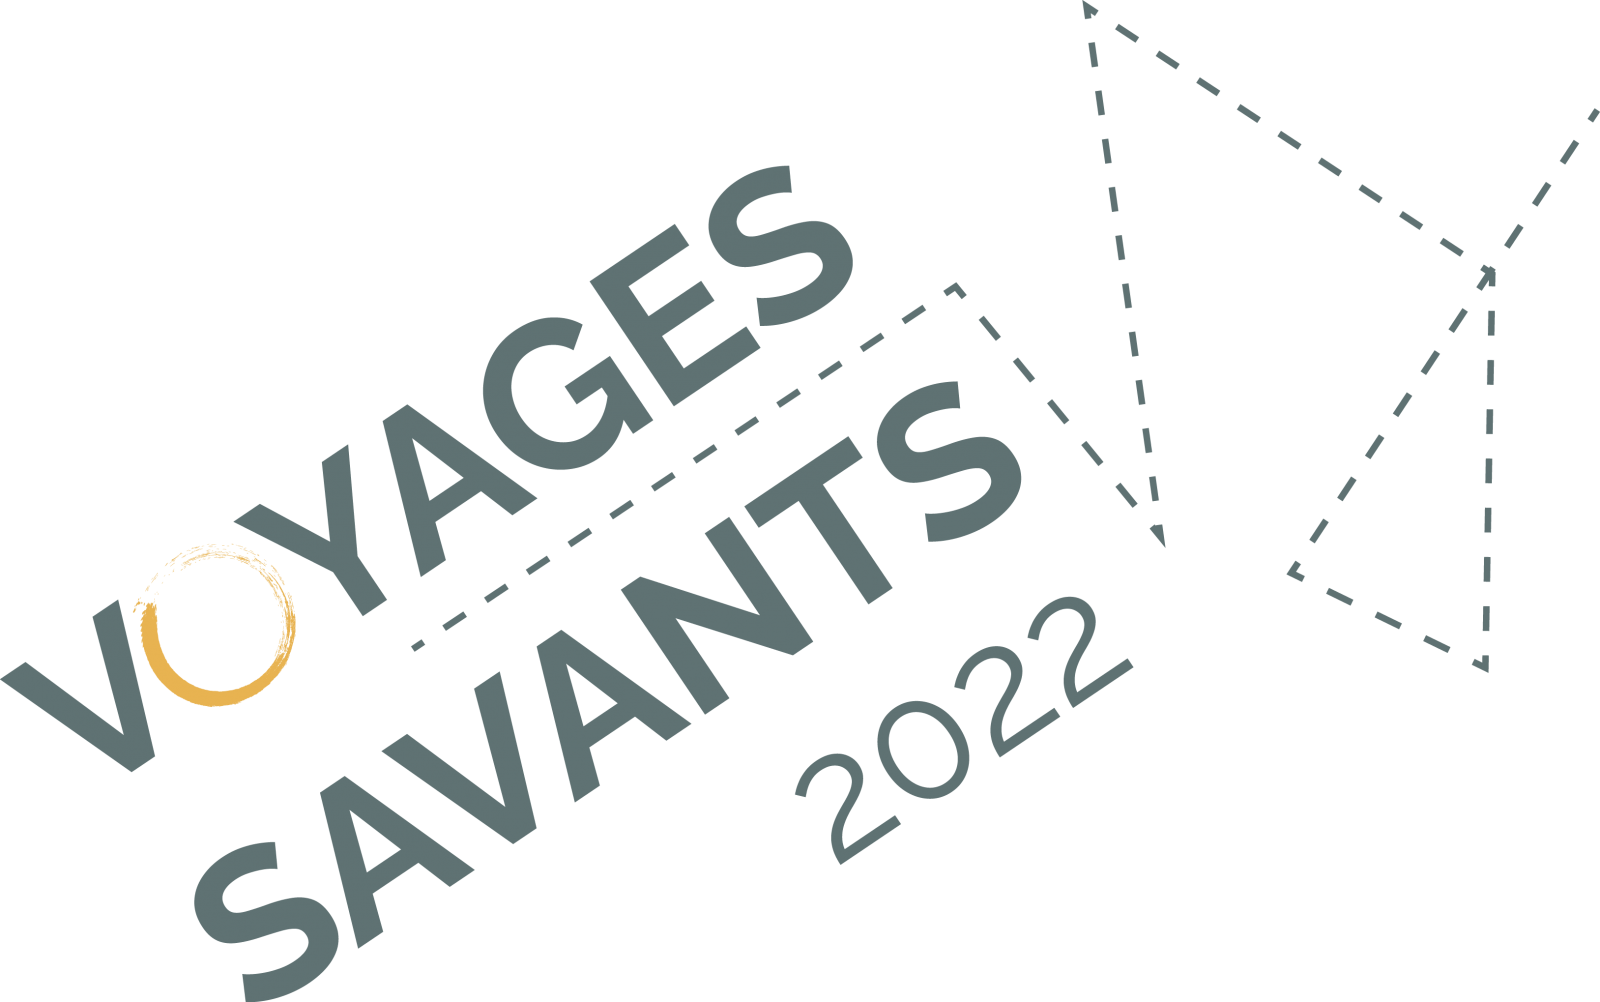 Image Logo Voyages Savants 2022